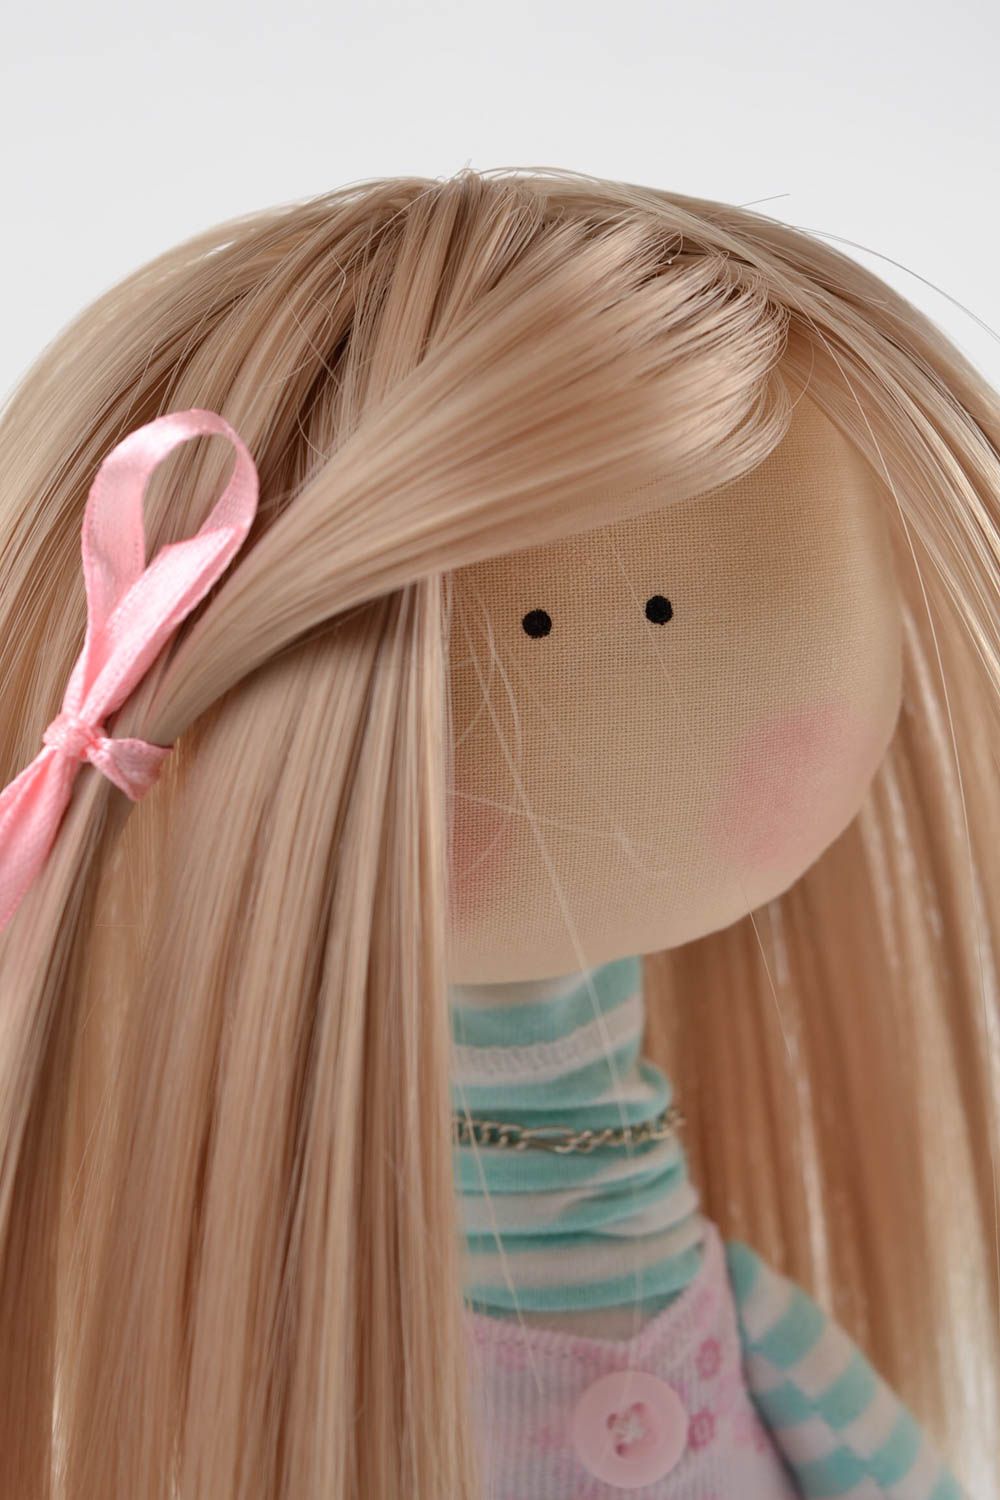 Handmade soft toy designer textile doll for girls stylish interior decoration photo 4